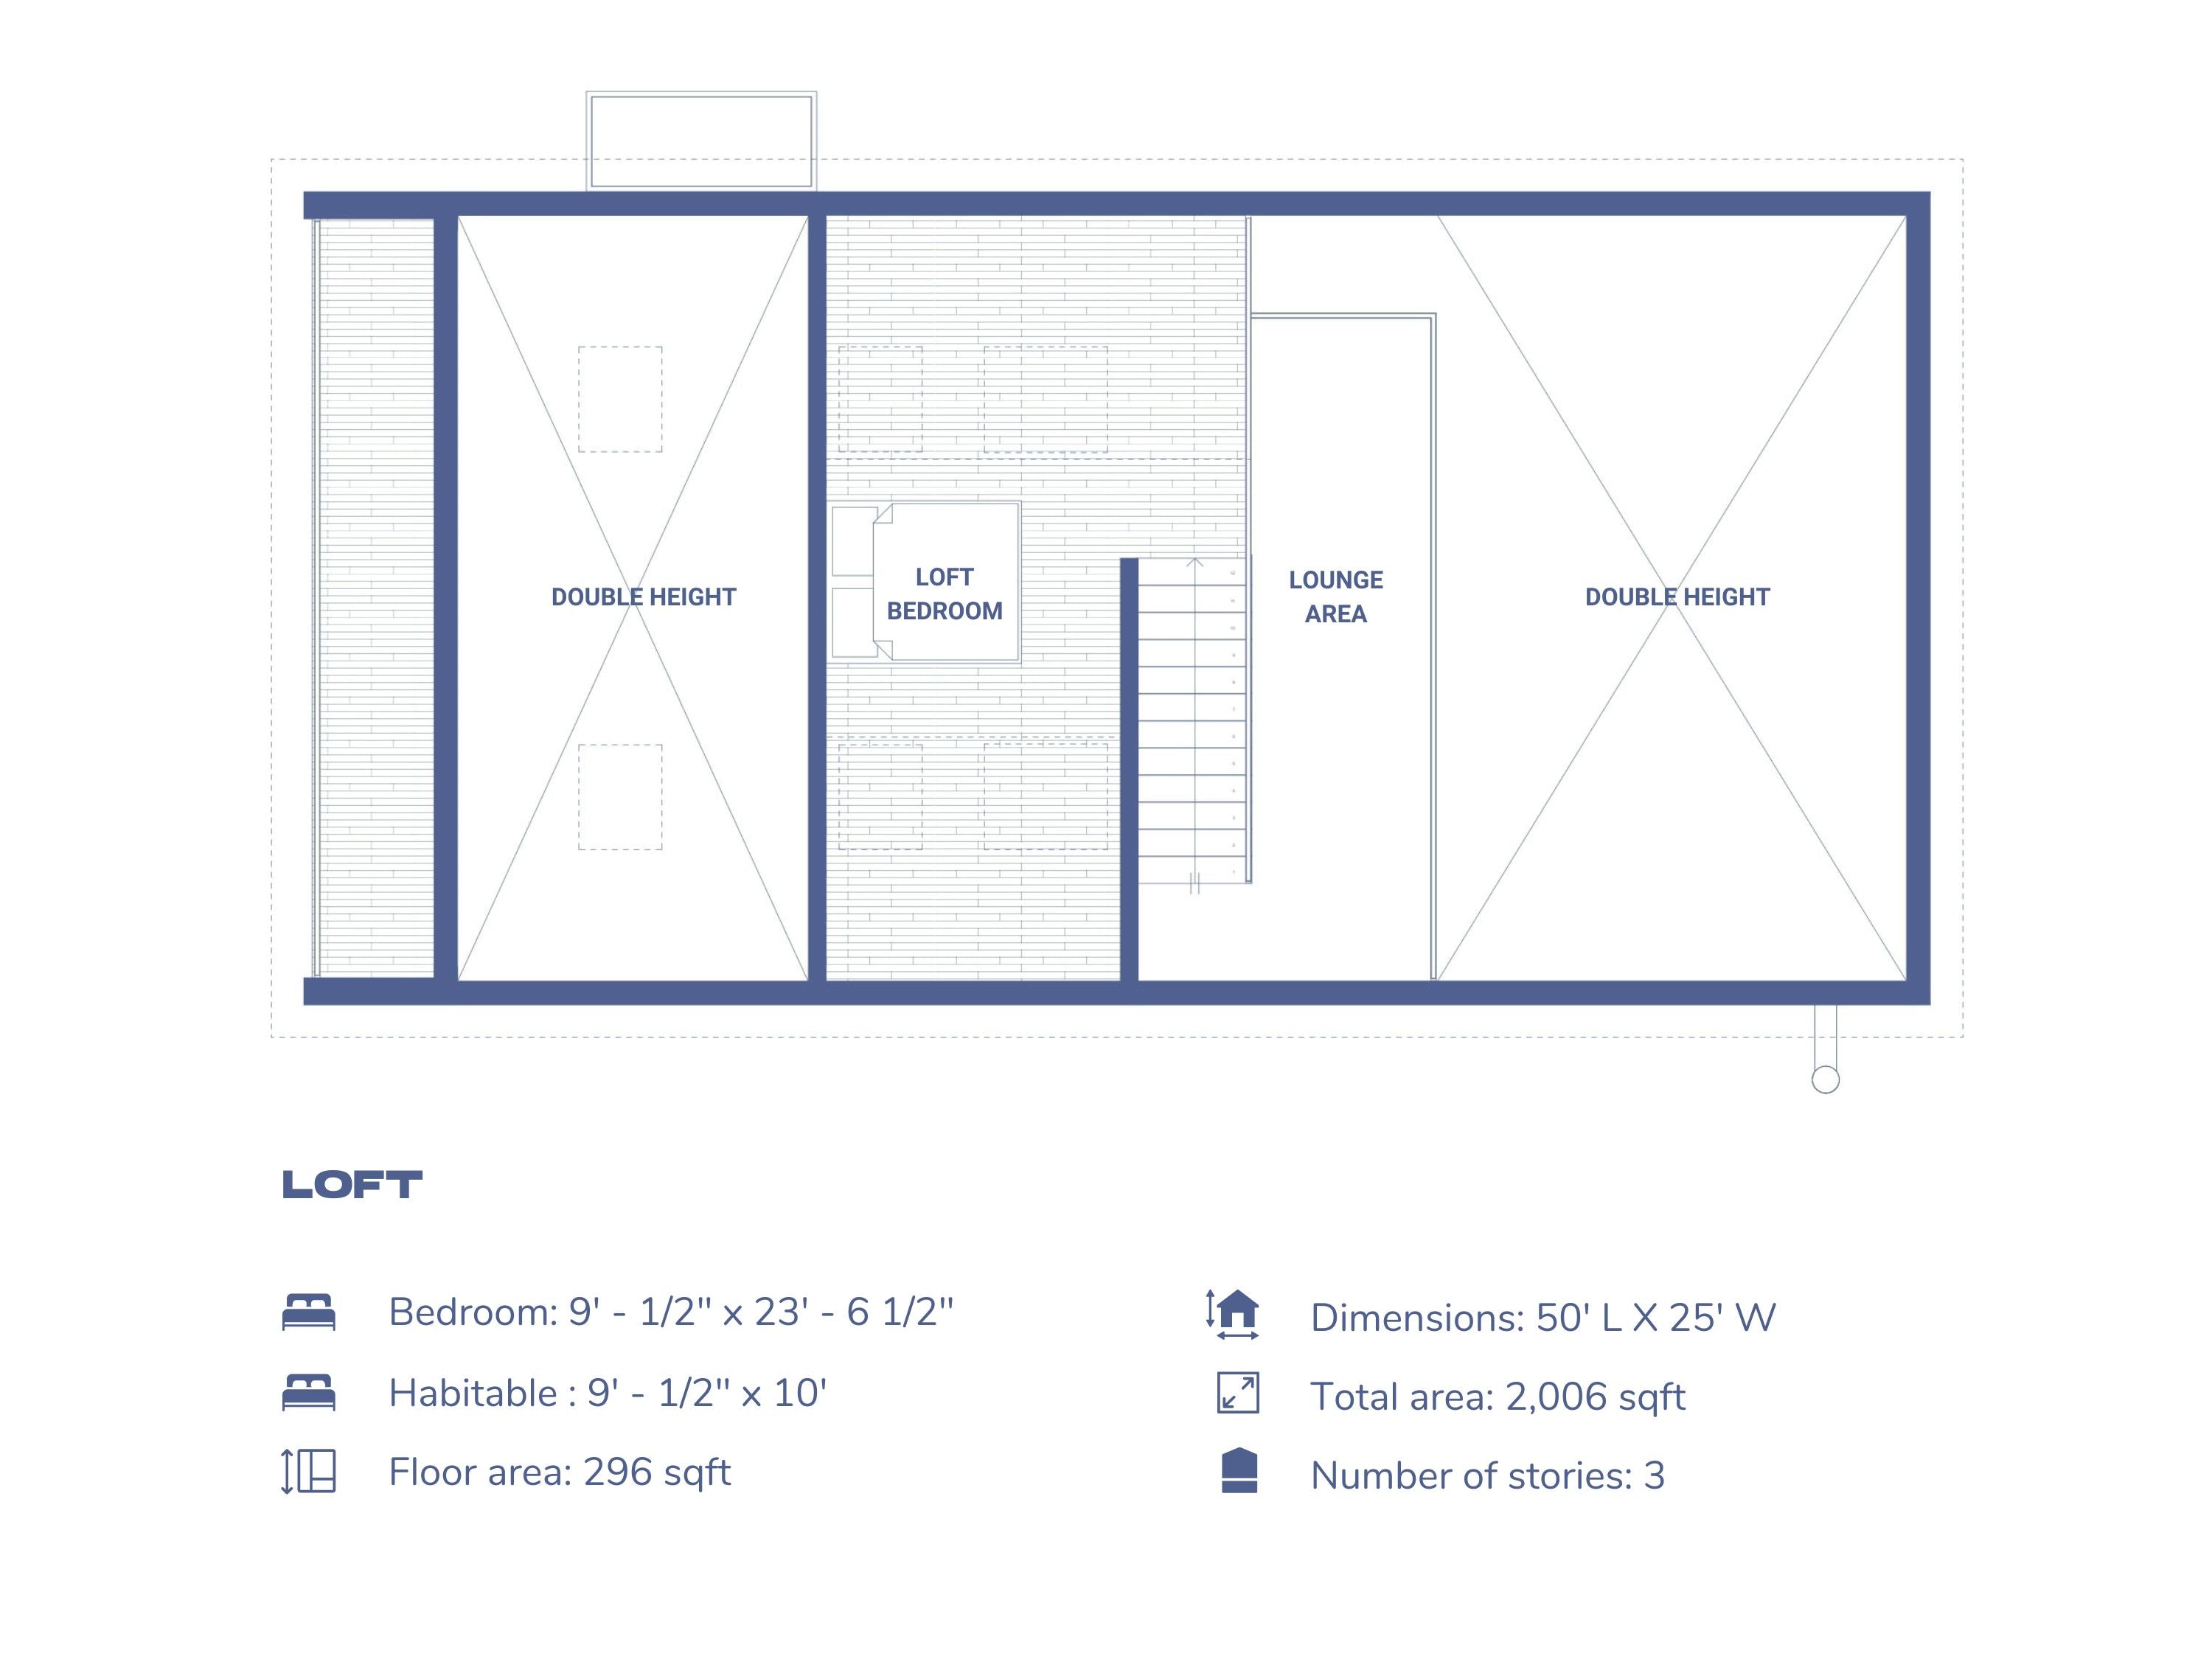 Loft plan of the Skyloft. It includes the loft bedroom